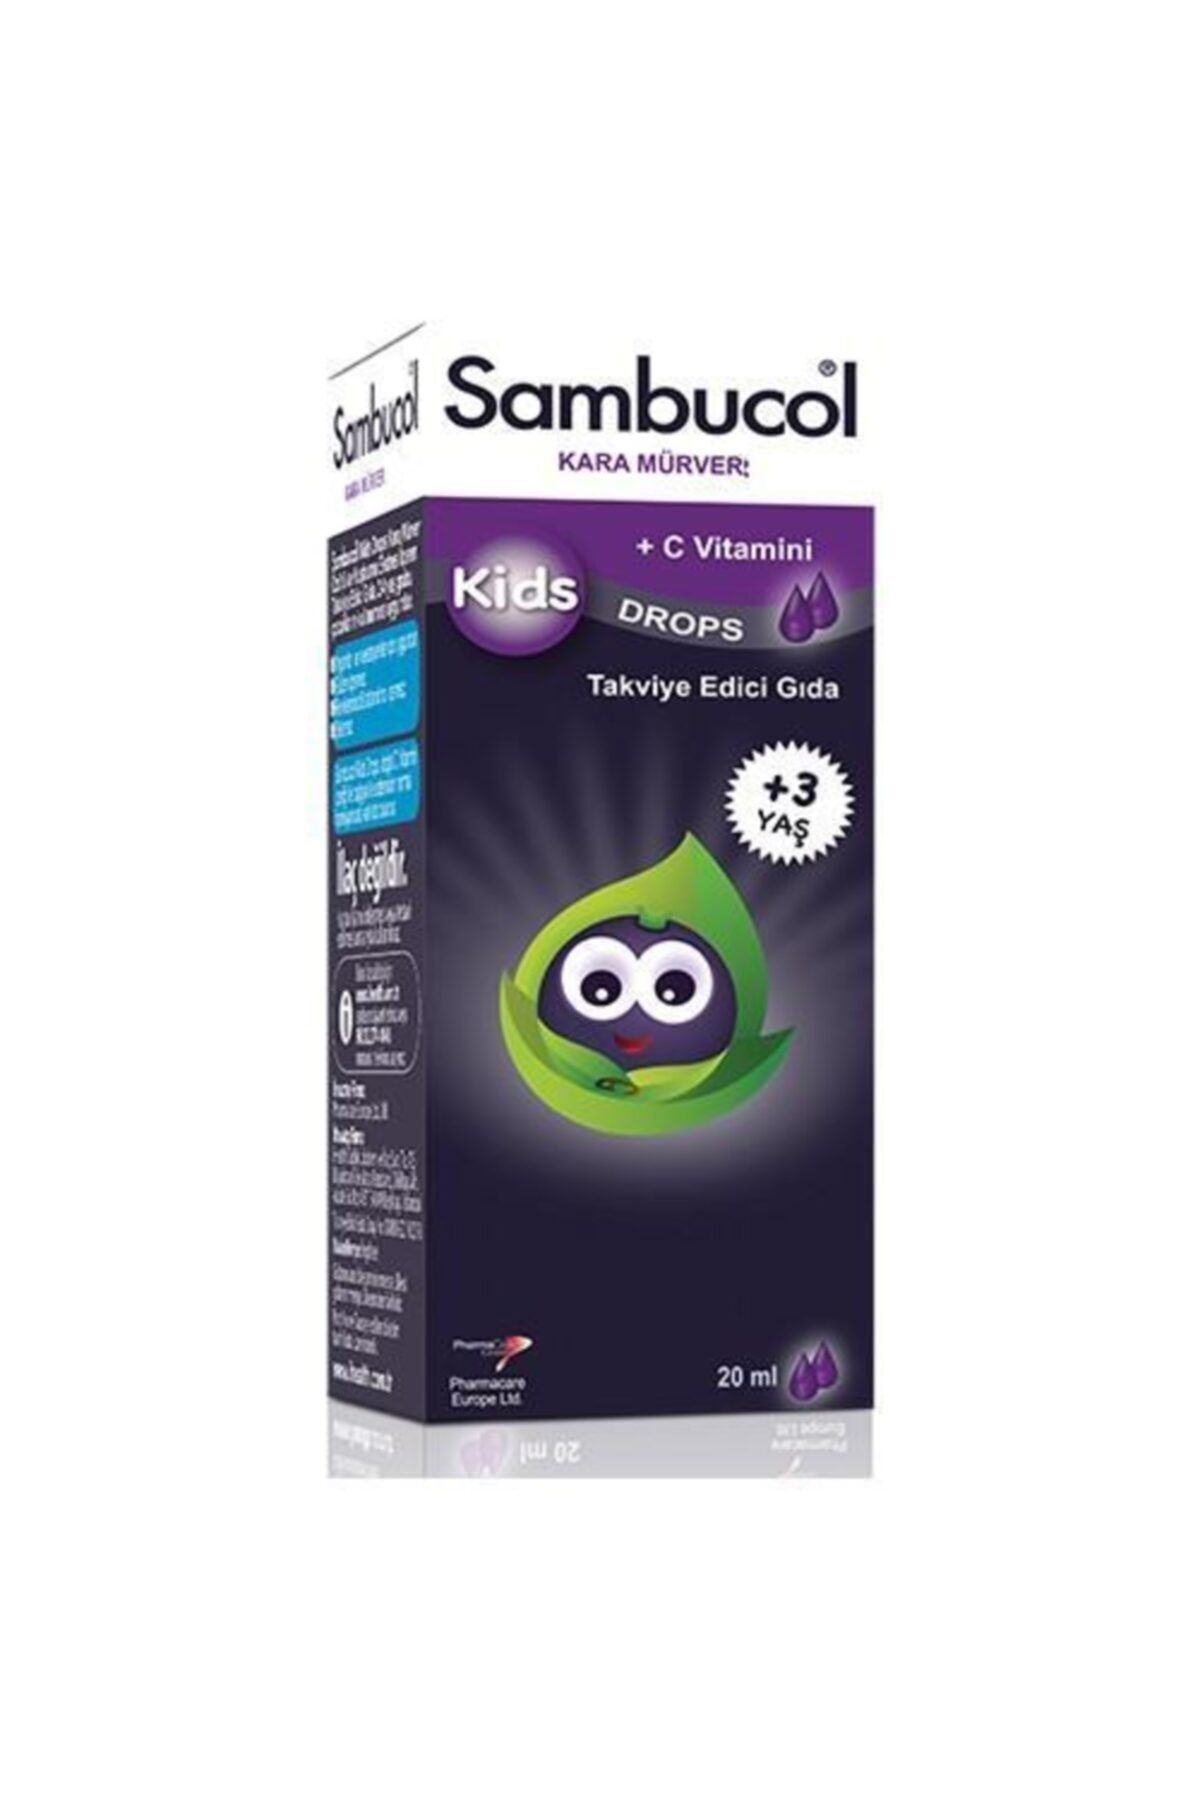 Sambucol Kara Mürver Kids +c Vitamini Drops 20 ml